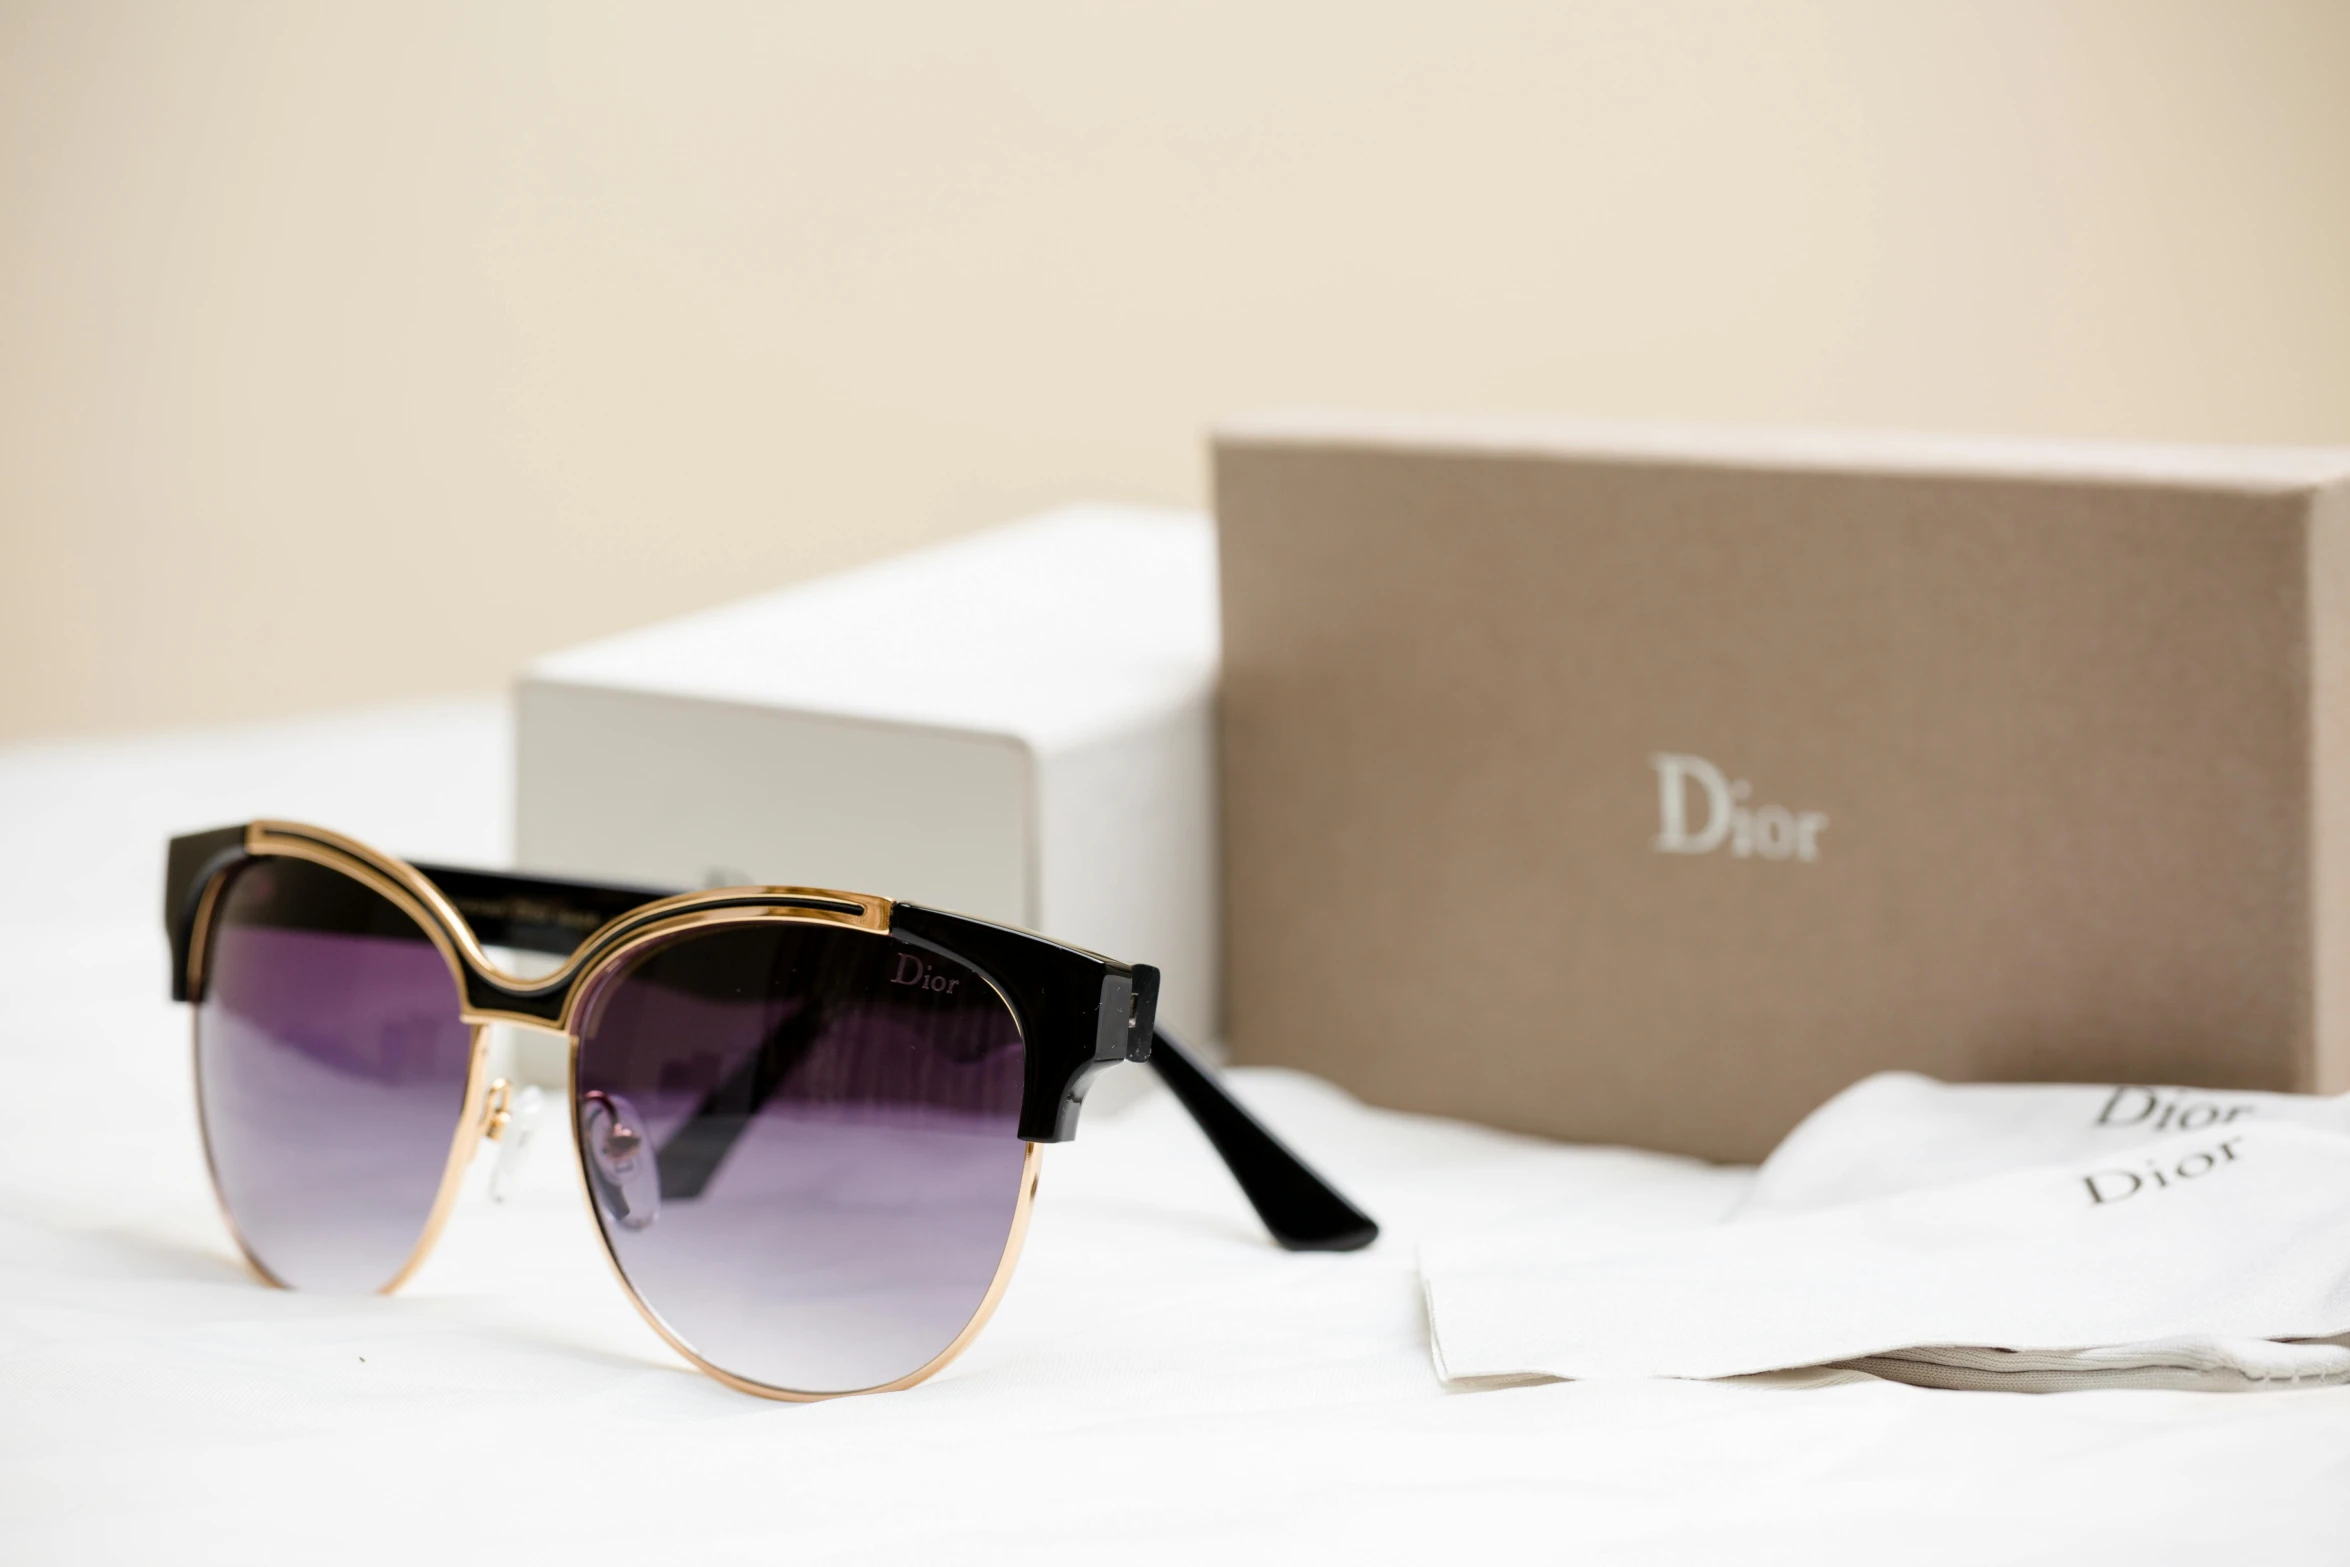 a small square frame sunglasses next to a box